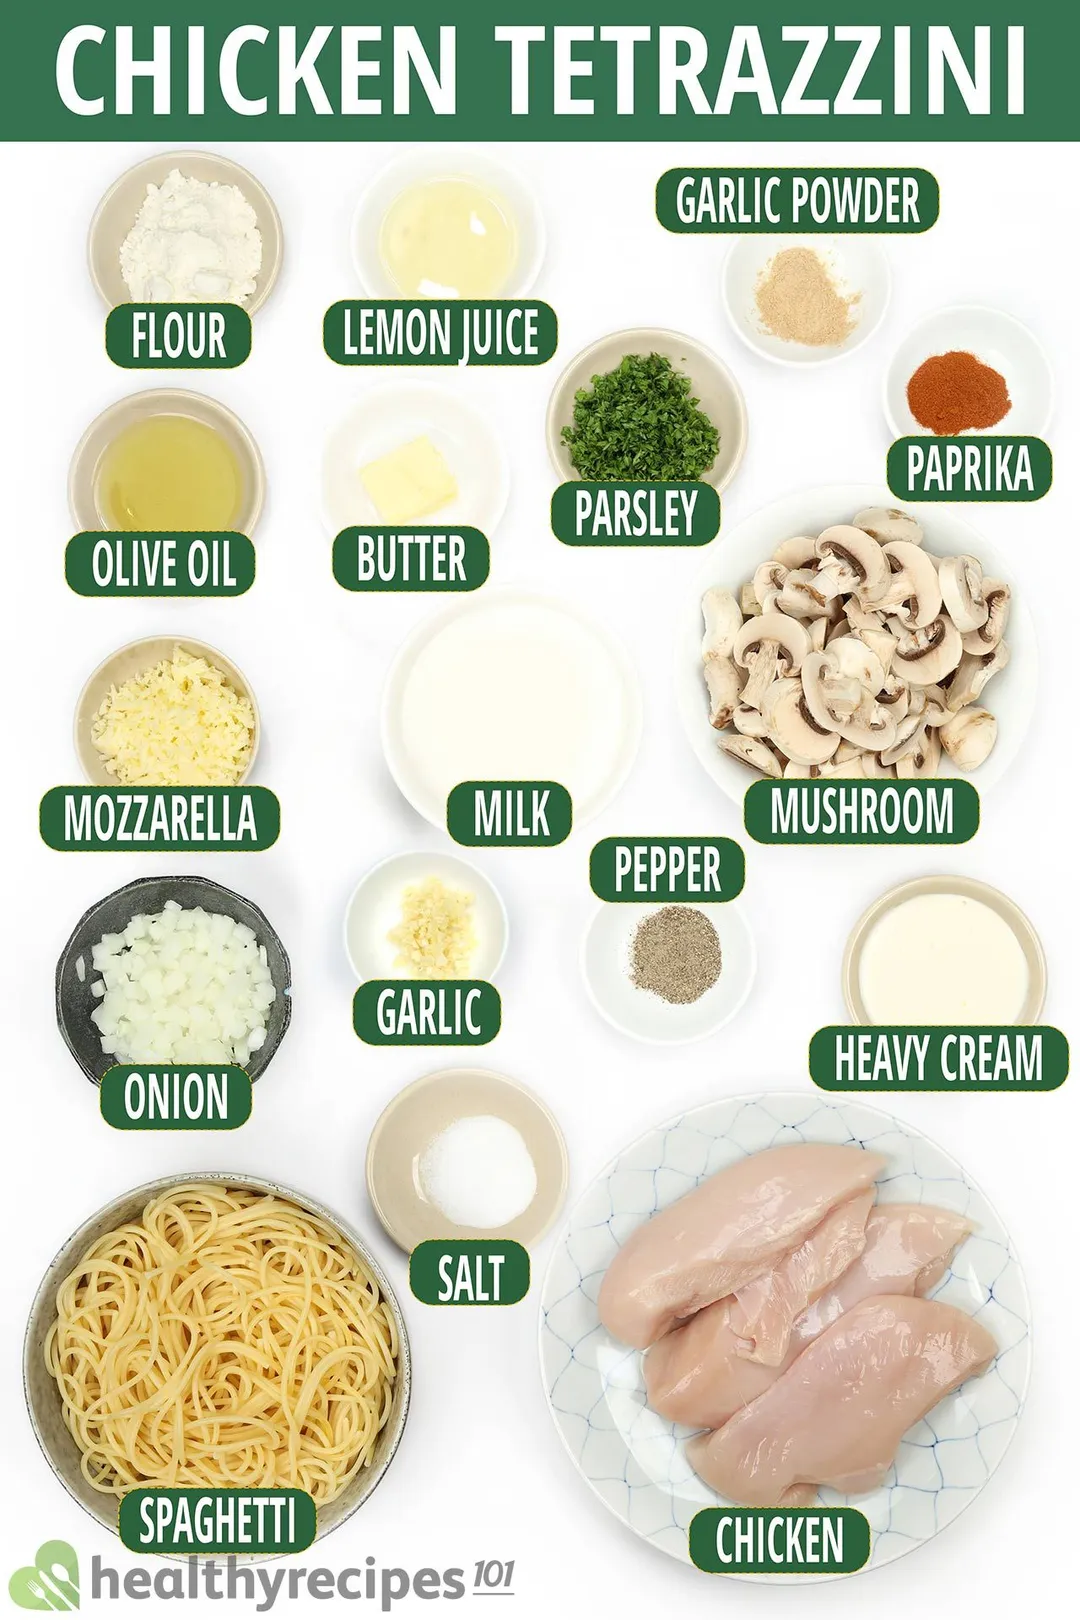 Ingredients for Chicken Tetrazzini